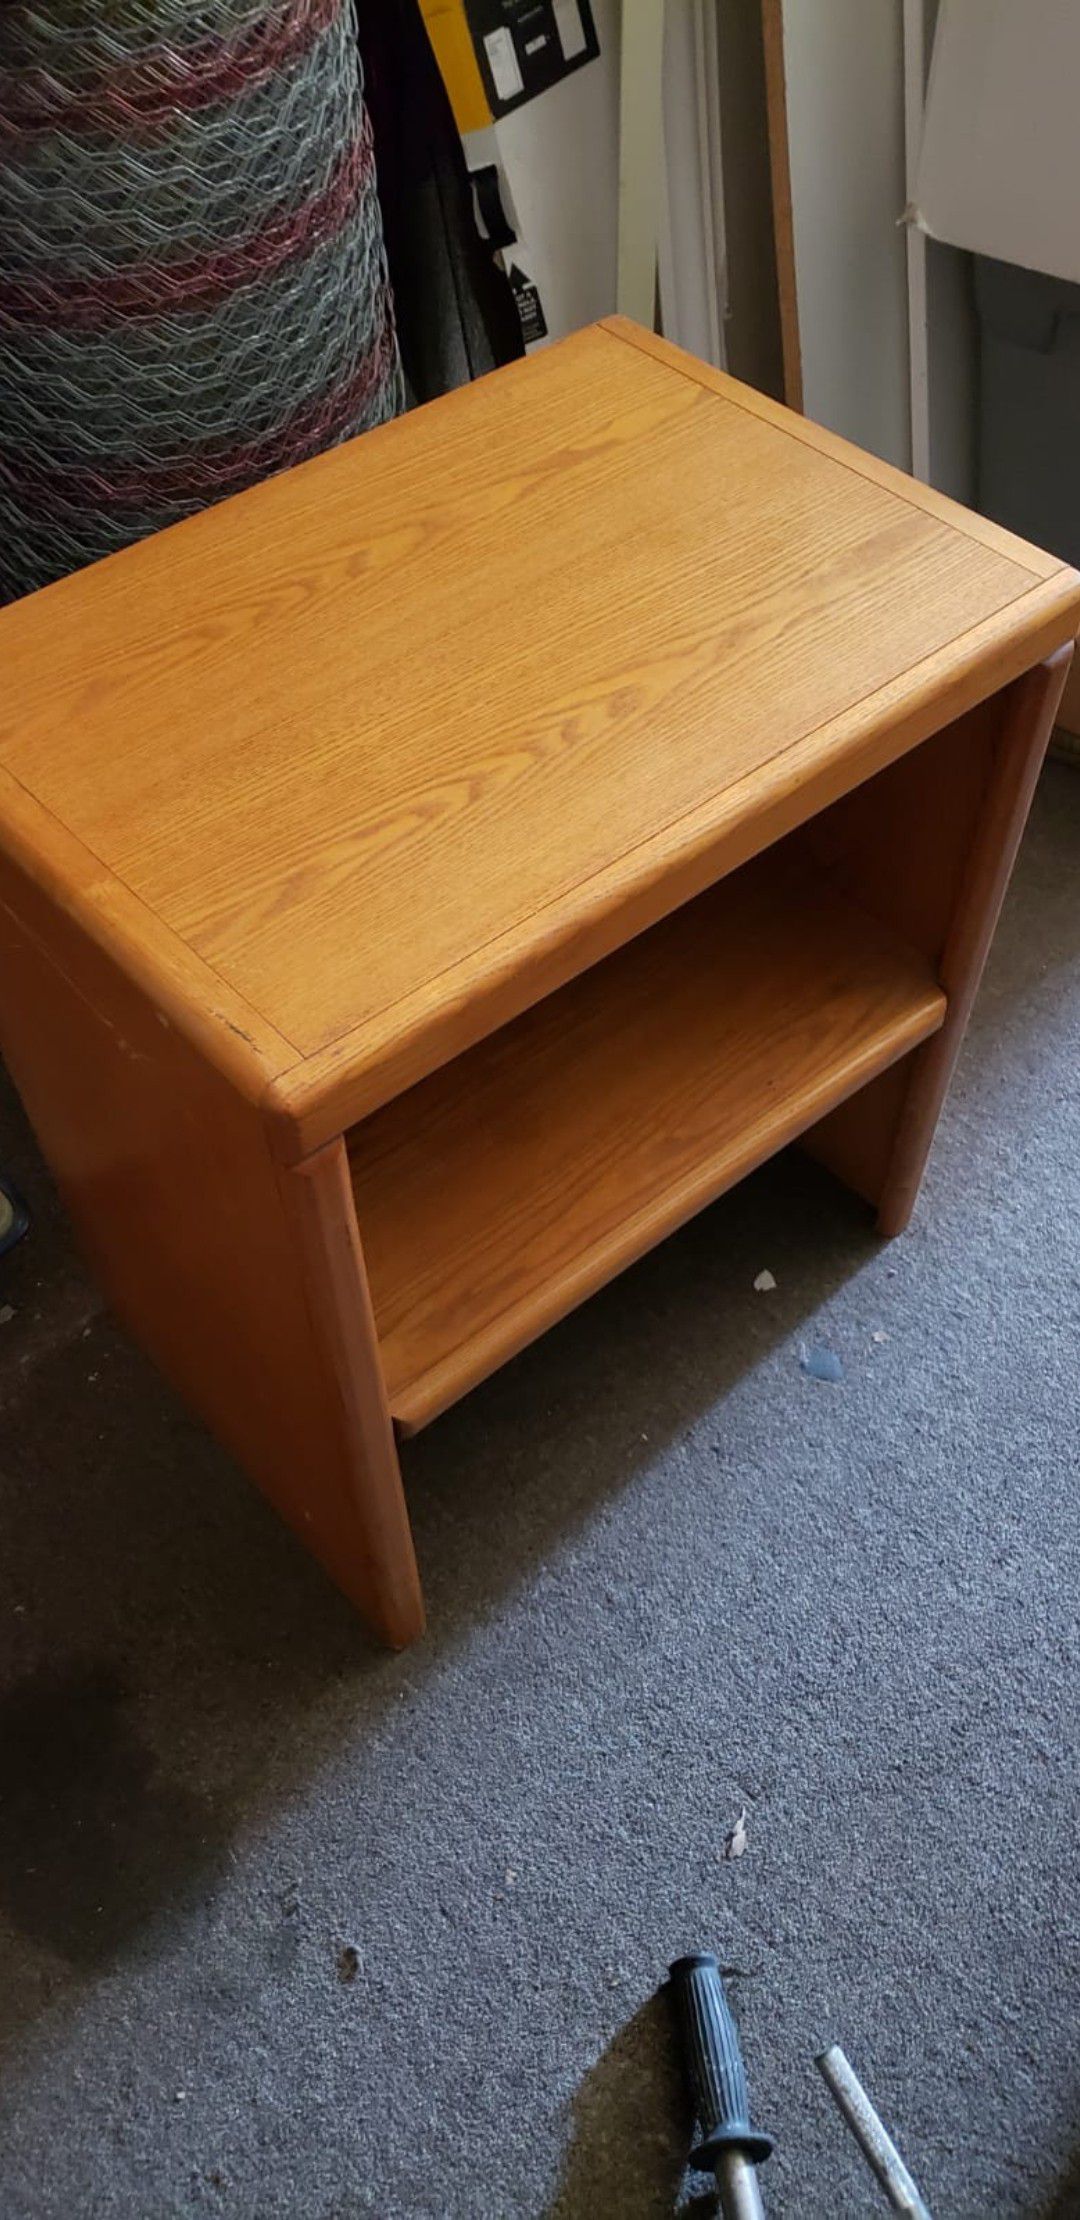 Small side table/shelf